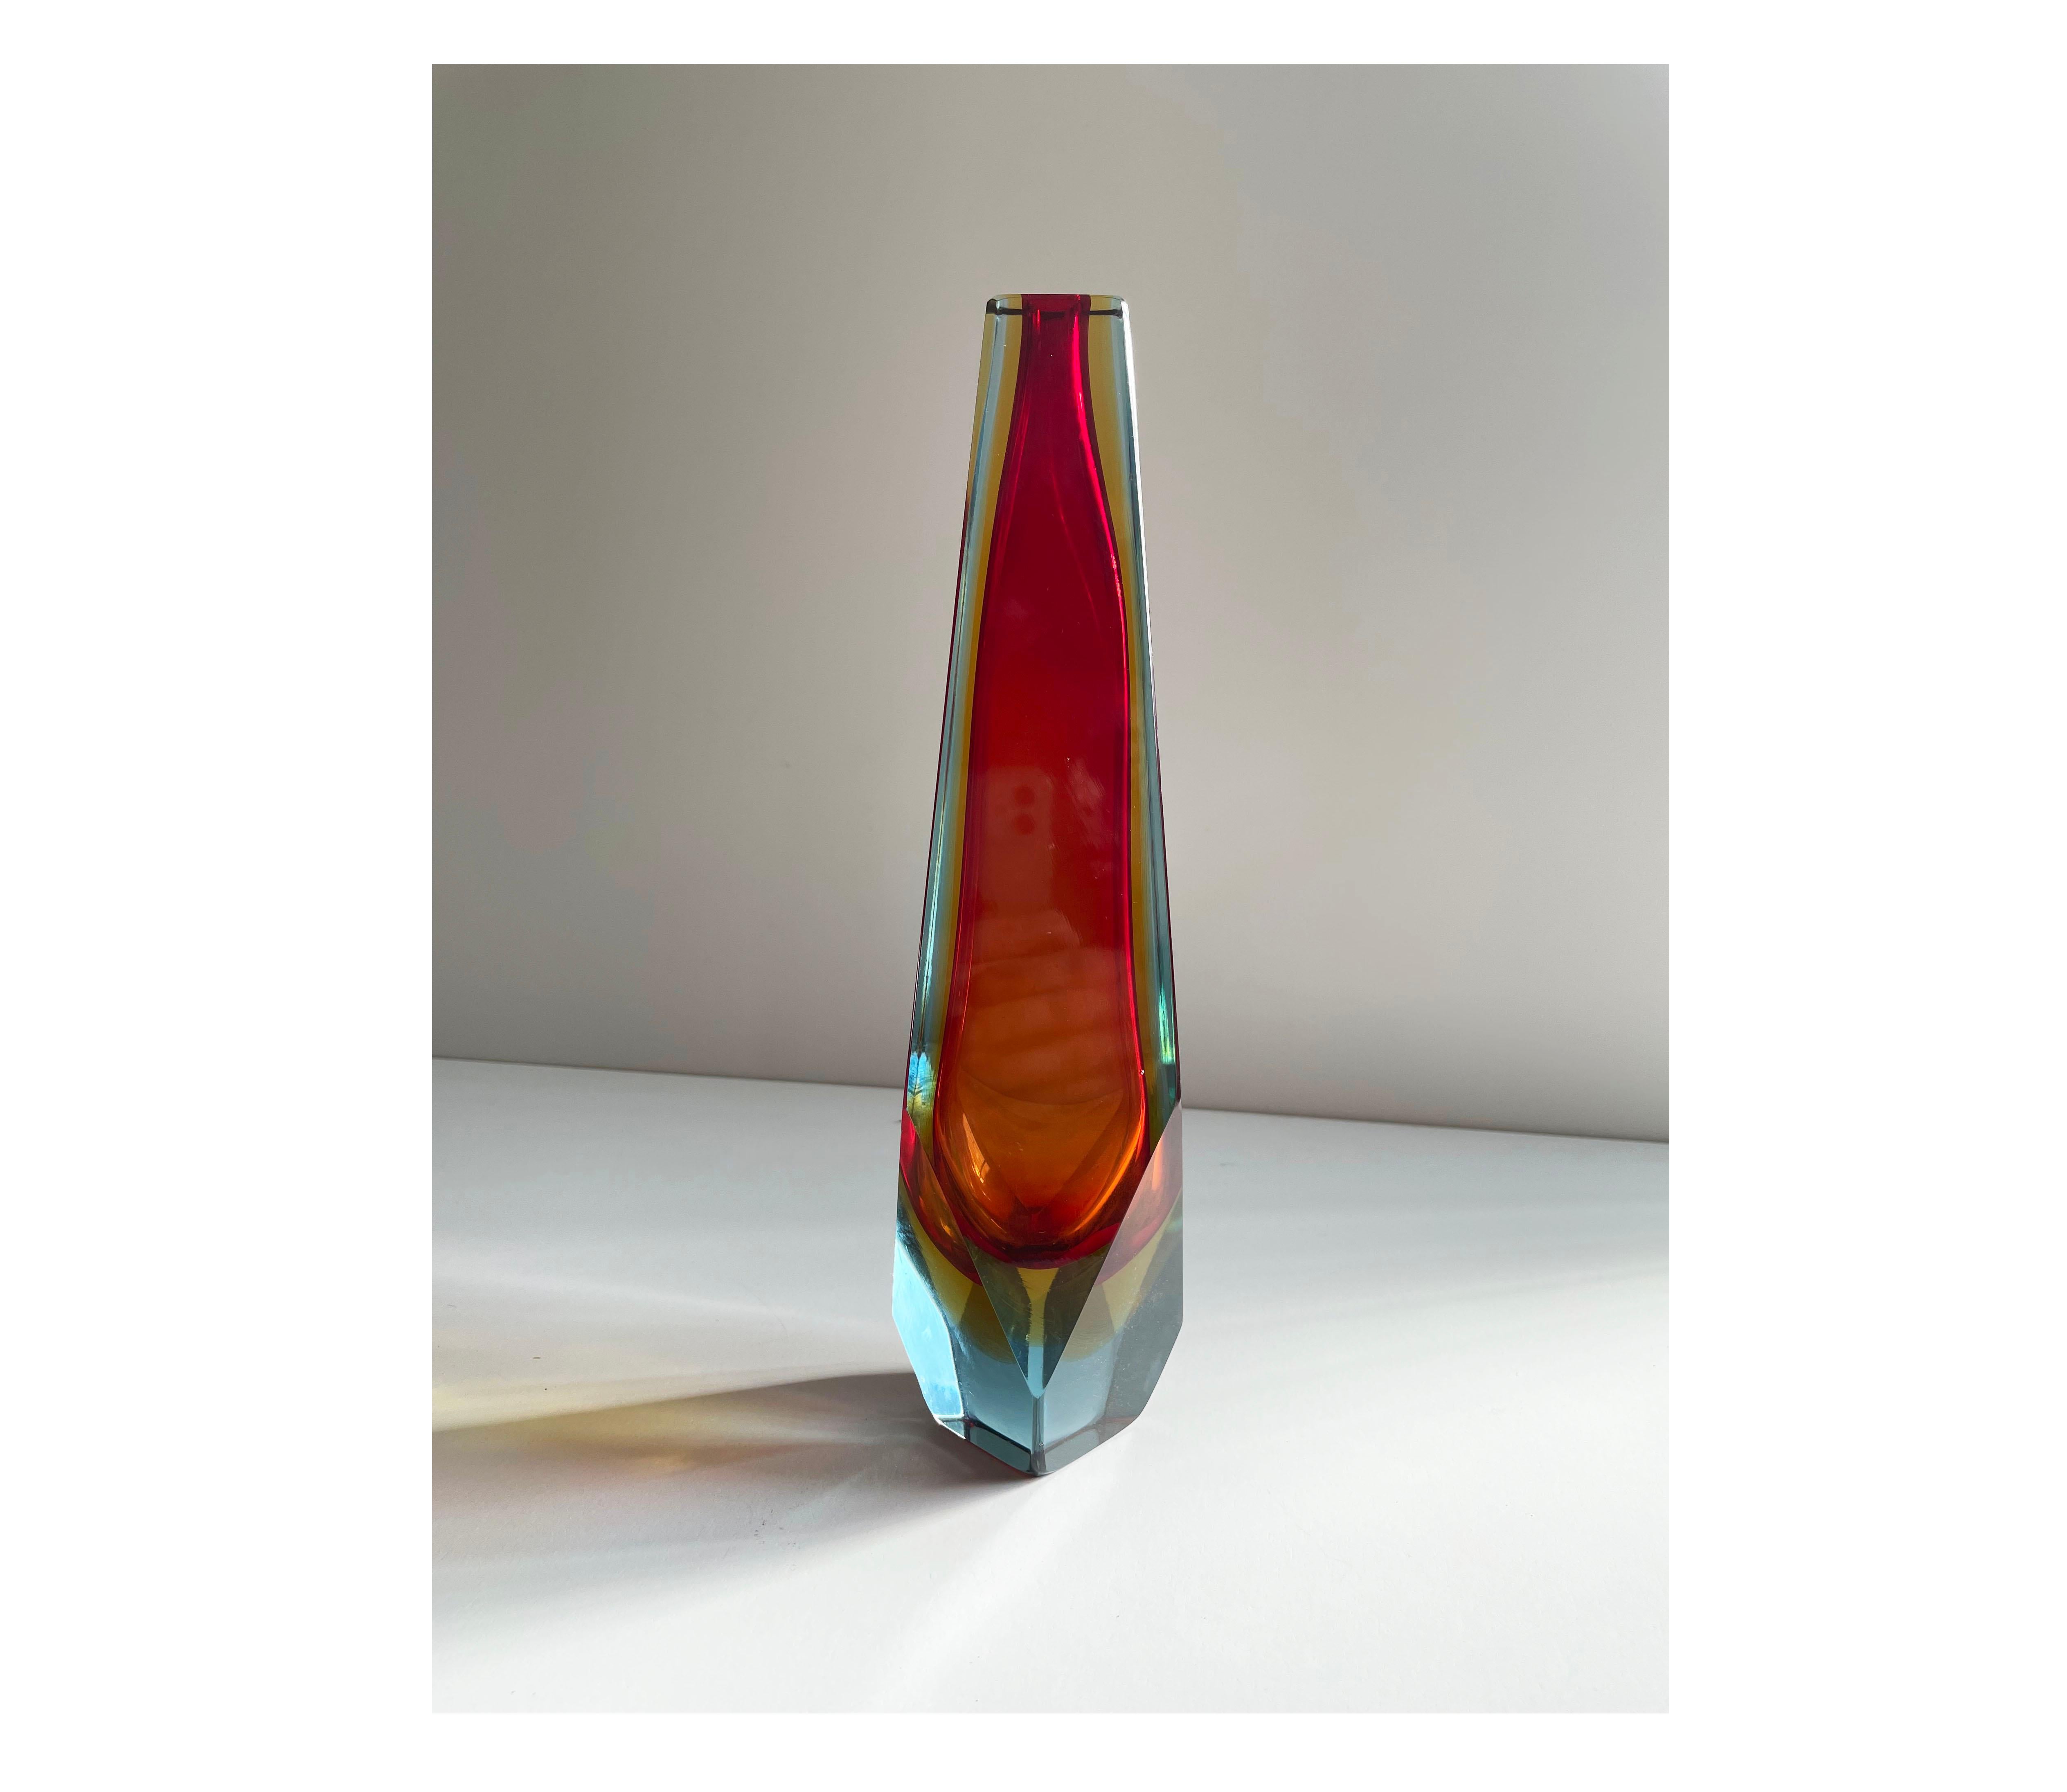 Vintage Mid-century Italian sommerso faceted vase, Murano glass 1960s.
Fabriqué par Alessandro Mandruzzato
Modèle San MarCo

